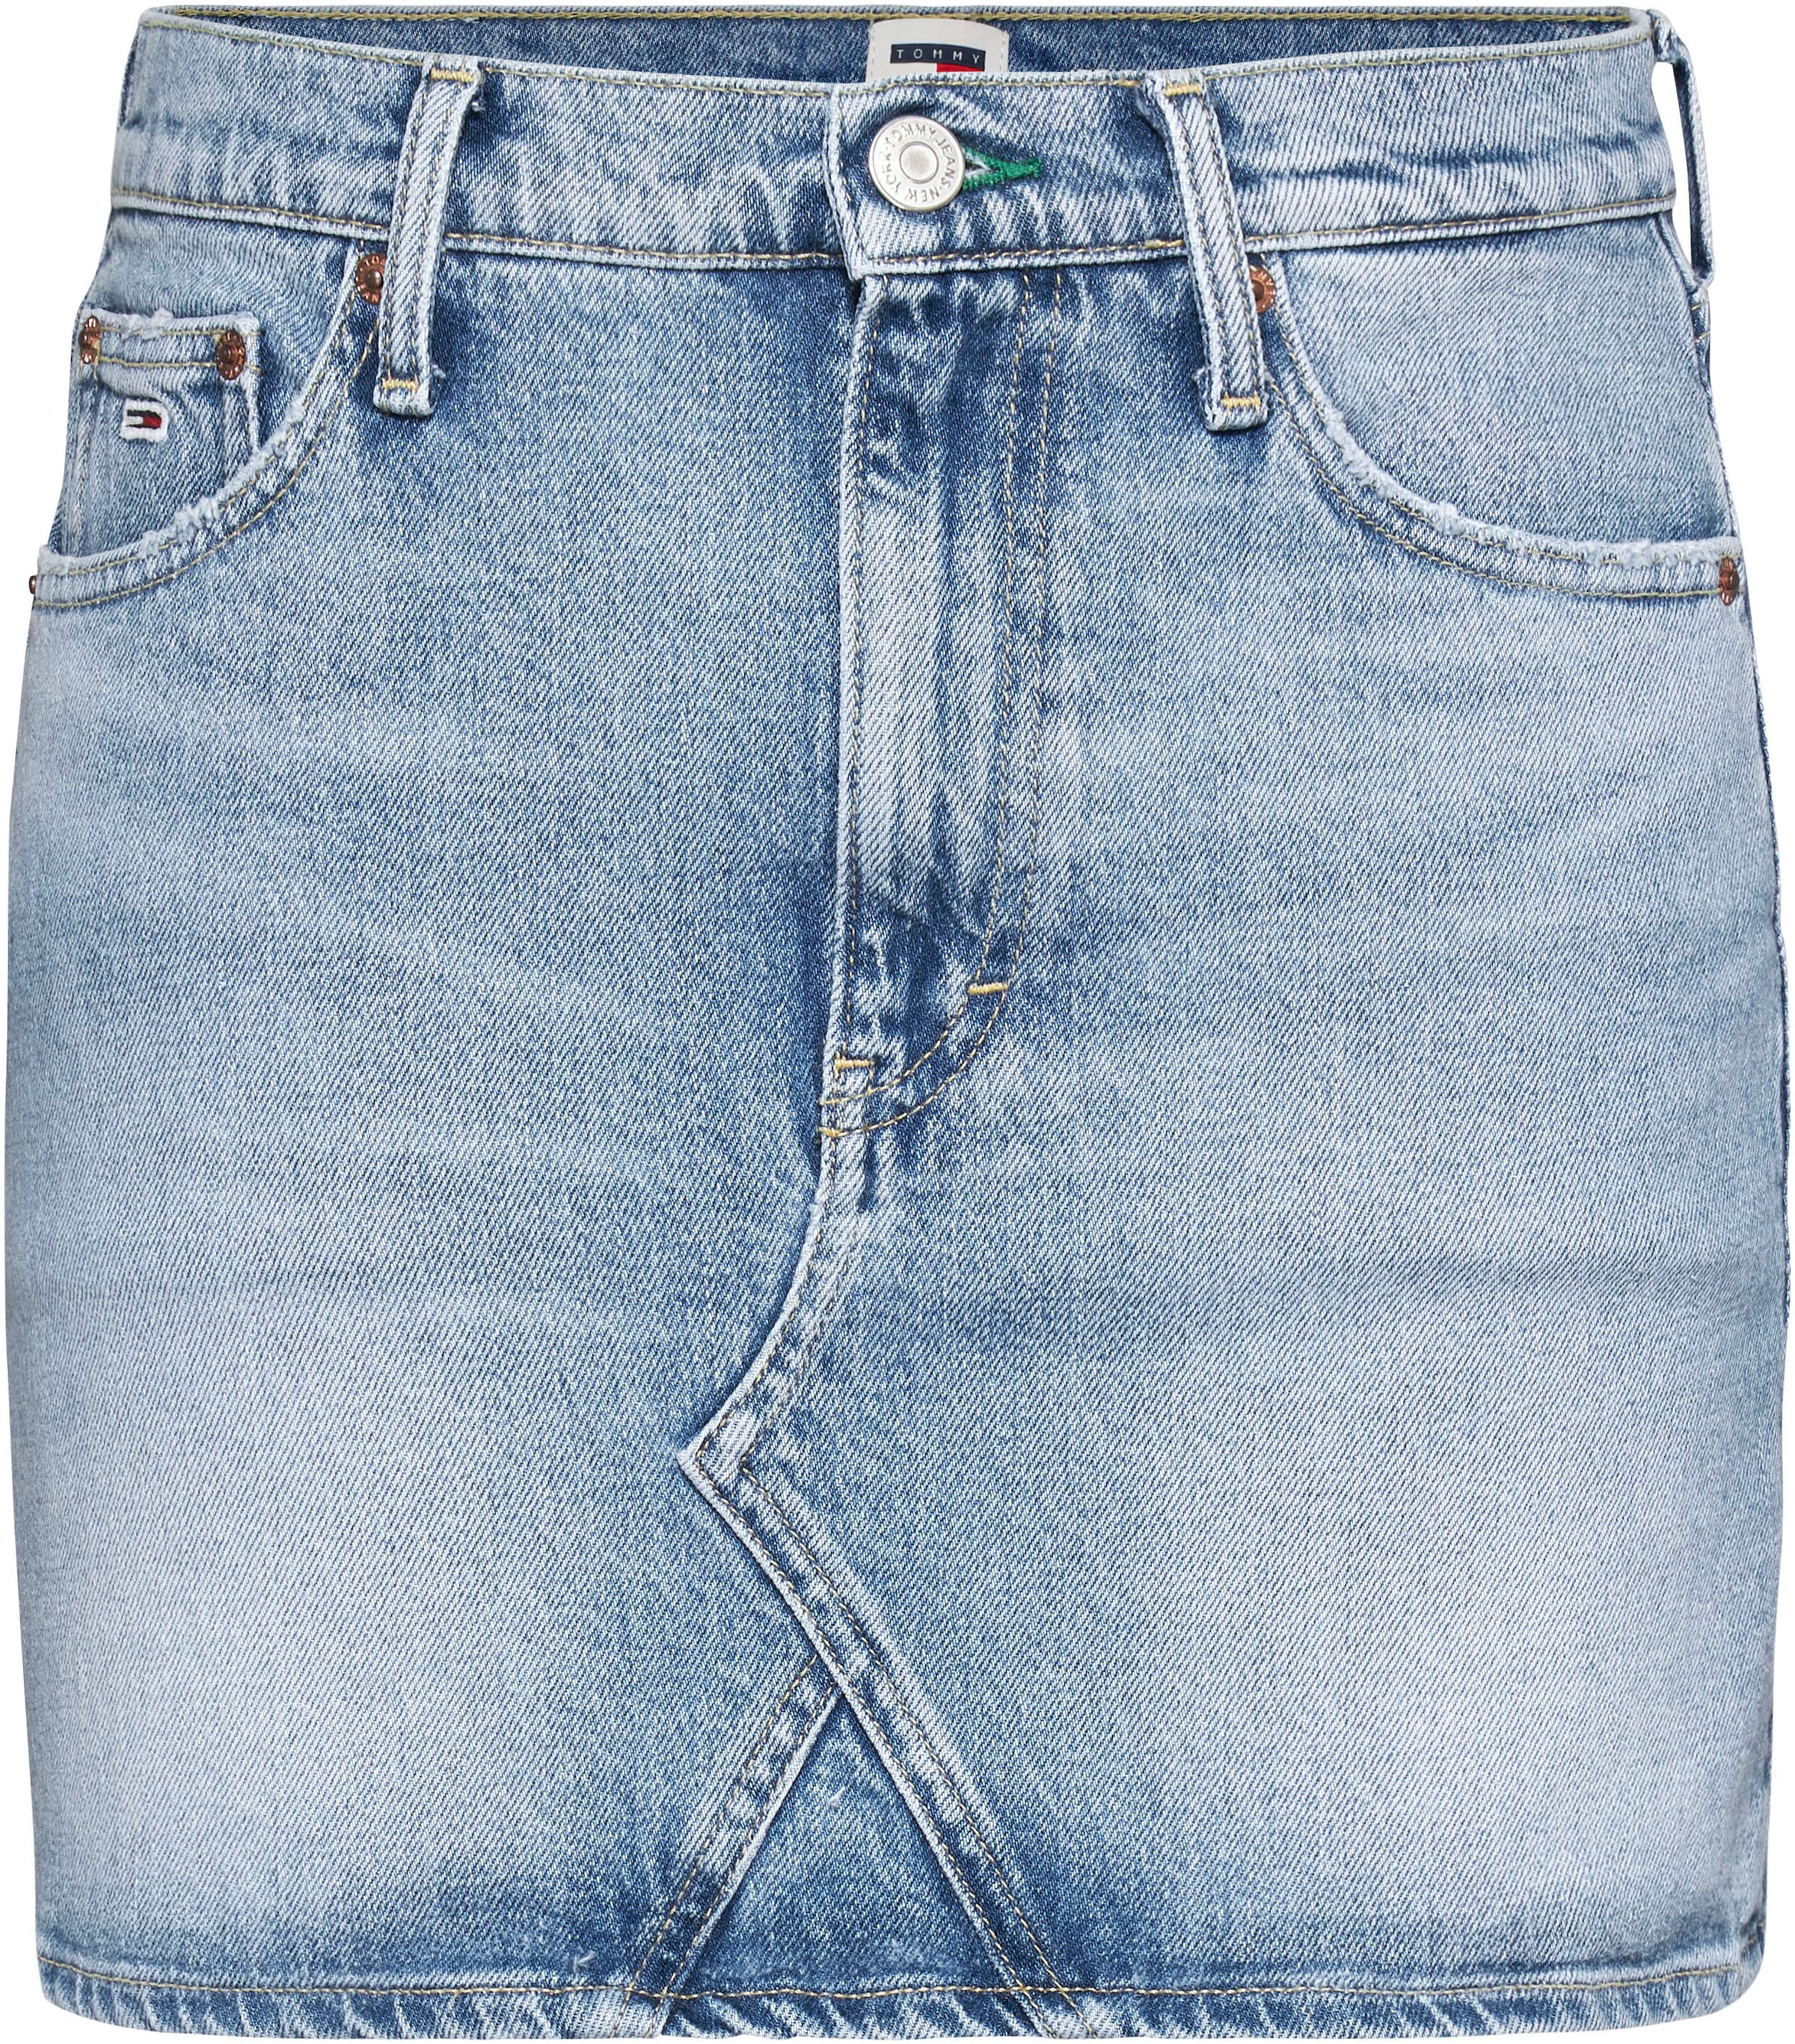 »IZZIE Tommy MN mit AH6114«, Jeansrock MR kaufen SKIRT OTTO Jeans online Ledermarkenlabel bei